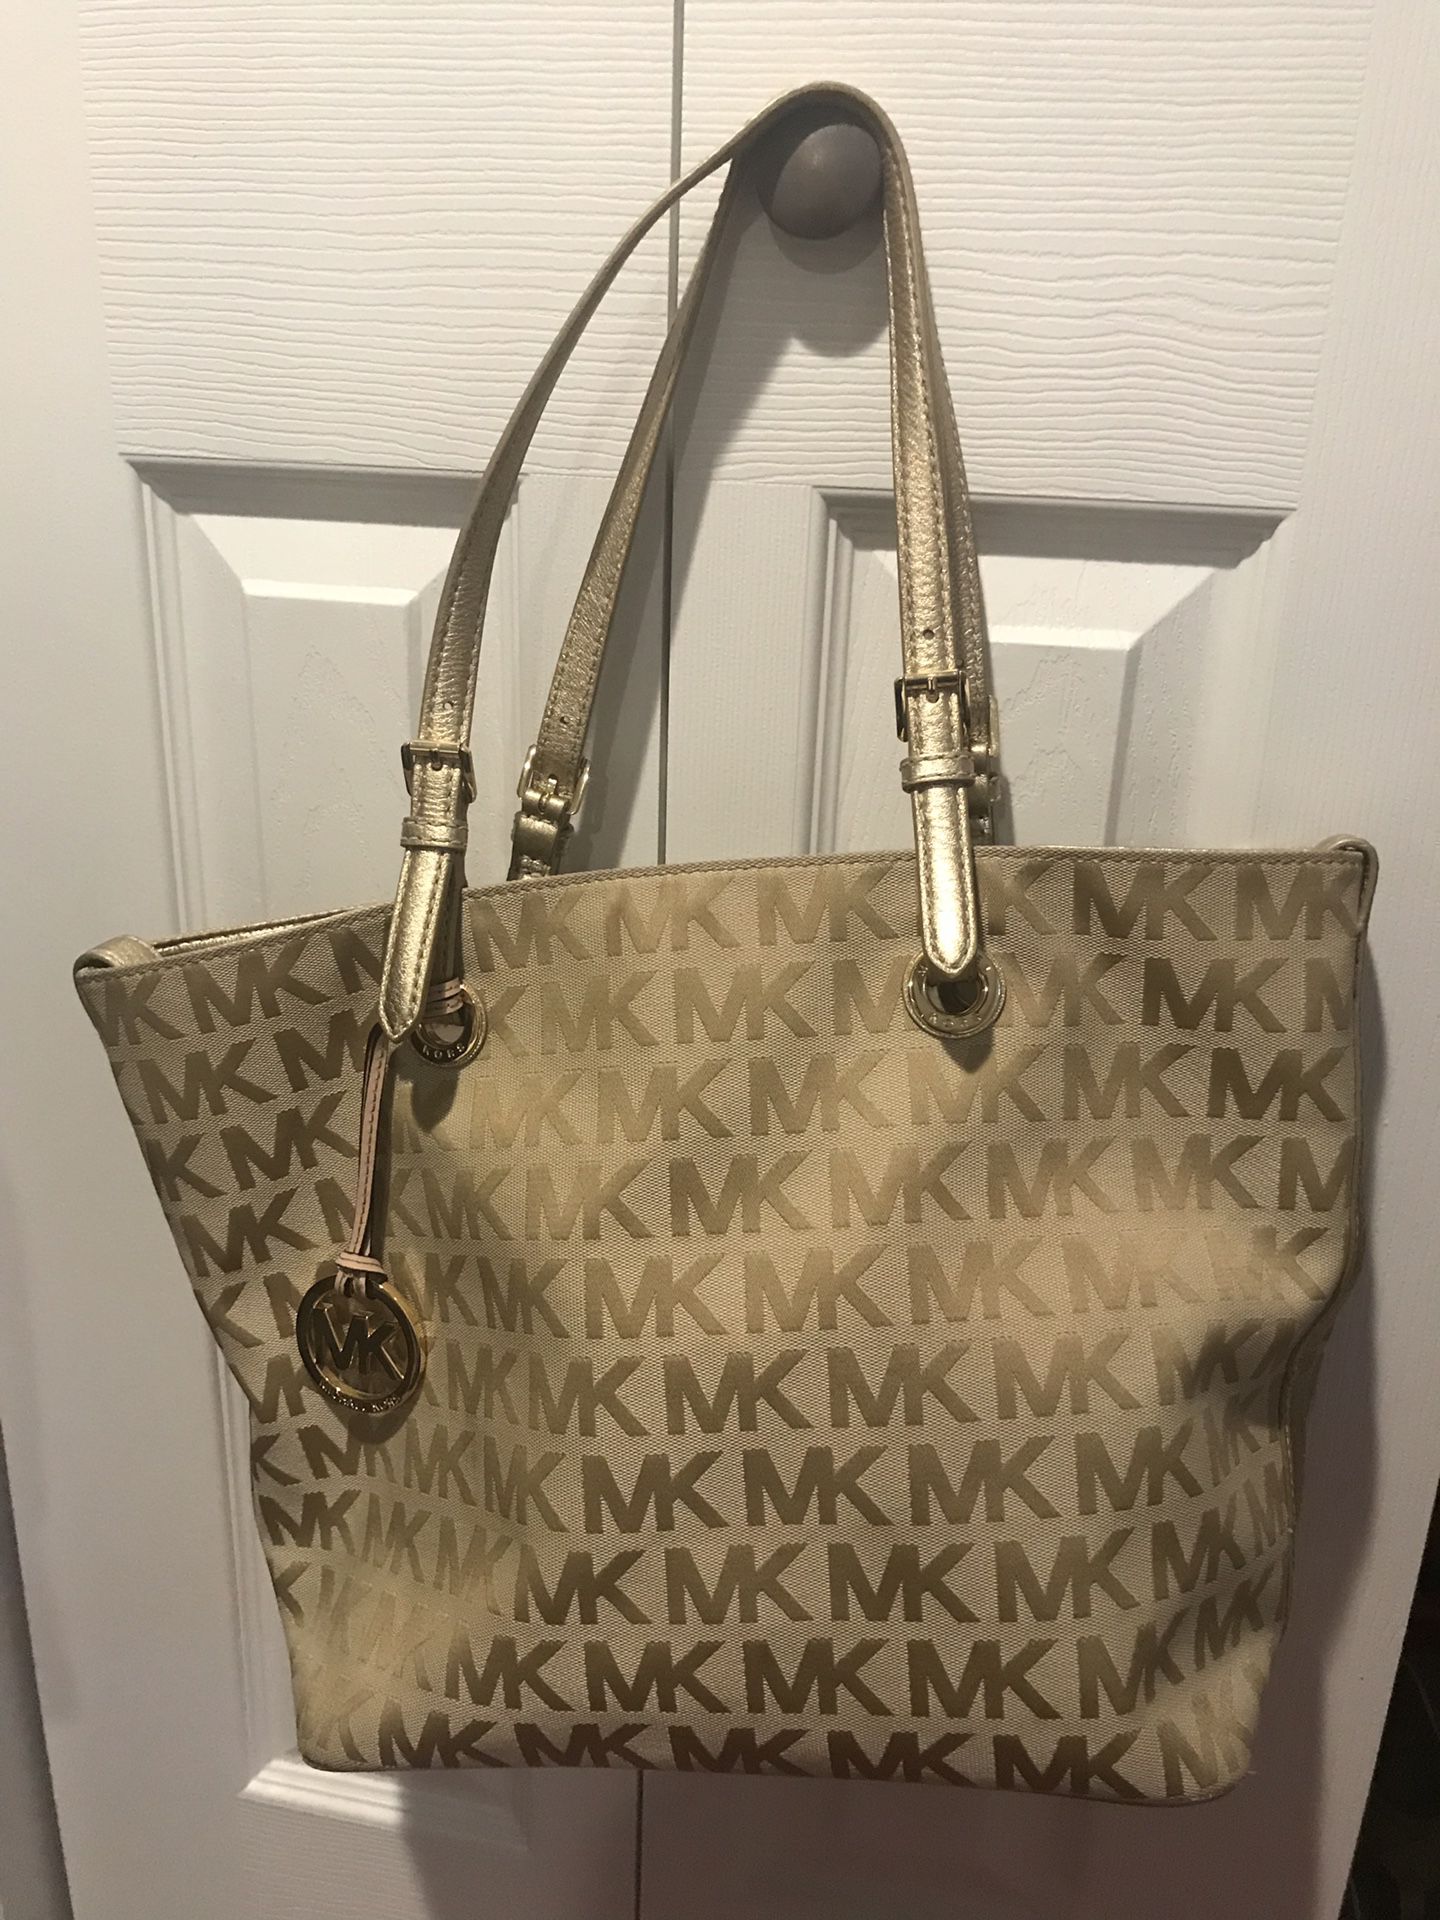 MK purse with MKCharm